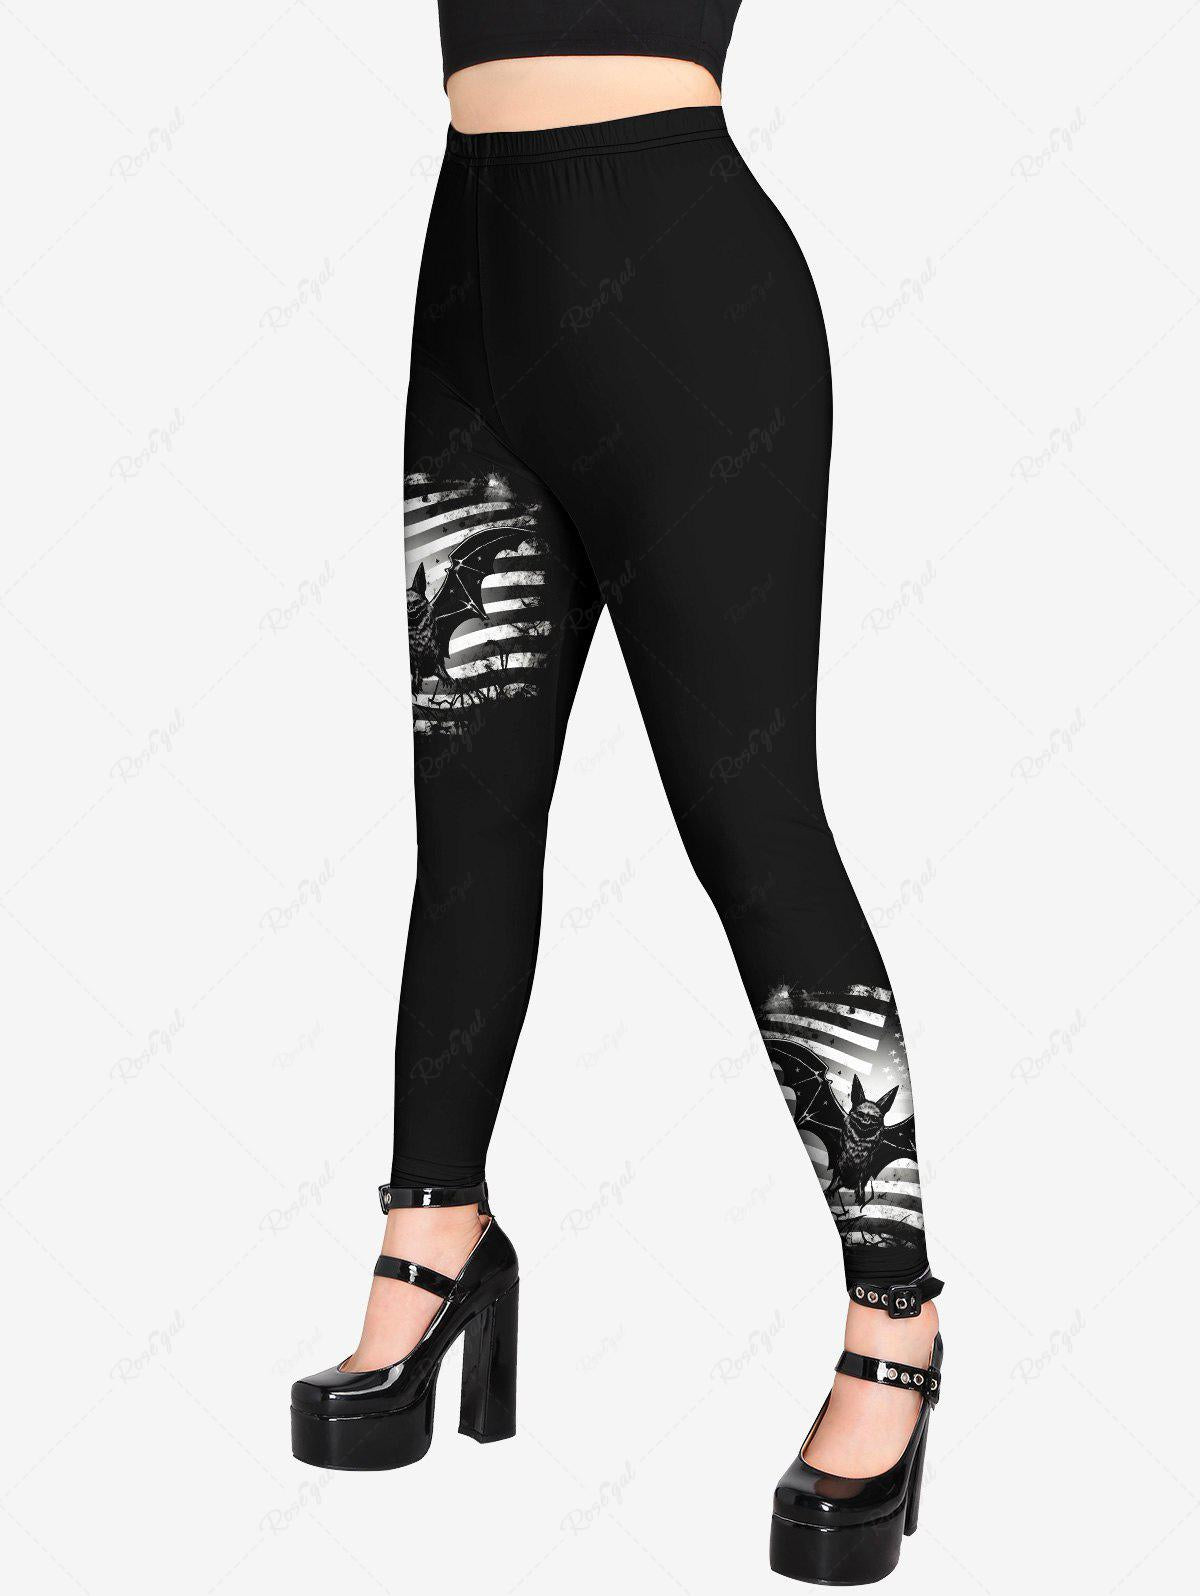  Halloween Yoga Pants Plus Size For Women Goth Bat